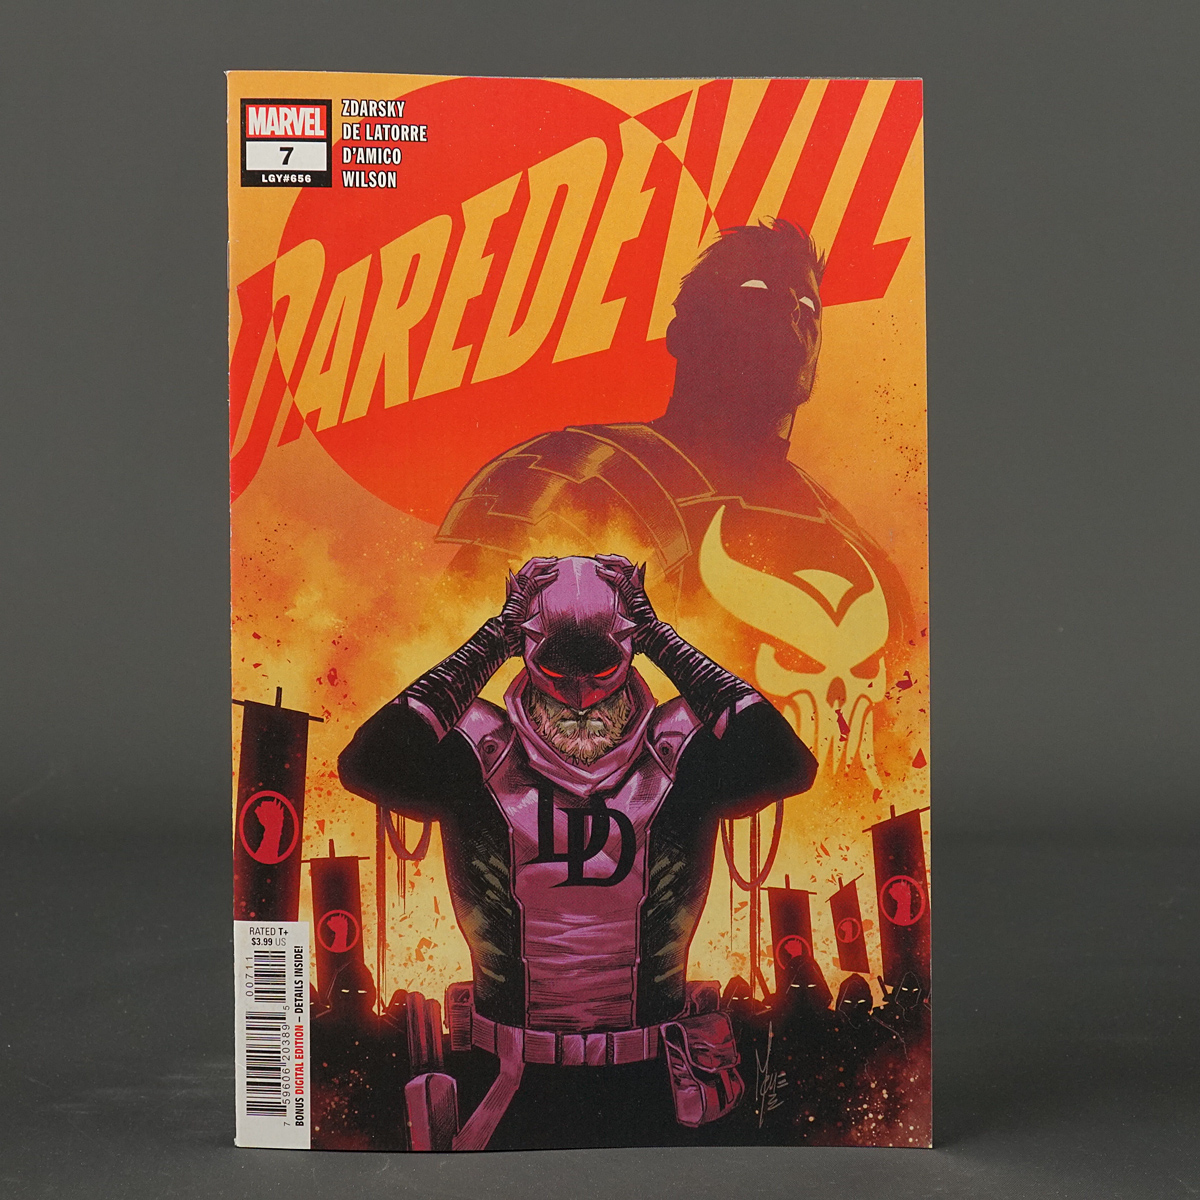 DAREDEVIL #7 Marvel Comics 2023 OCT221084 (W) Zdarsky (CA) Checchetto